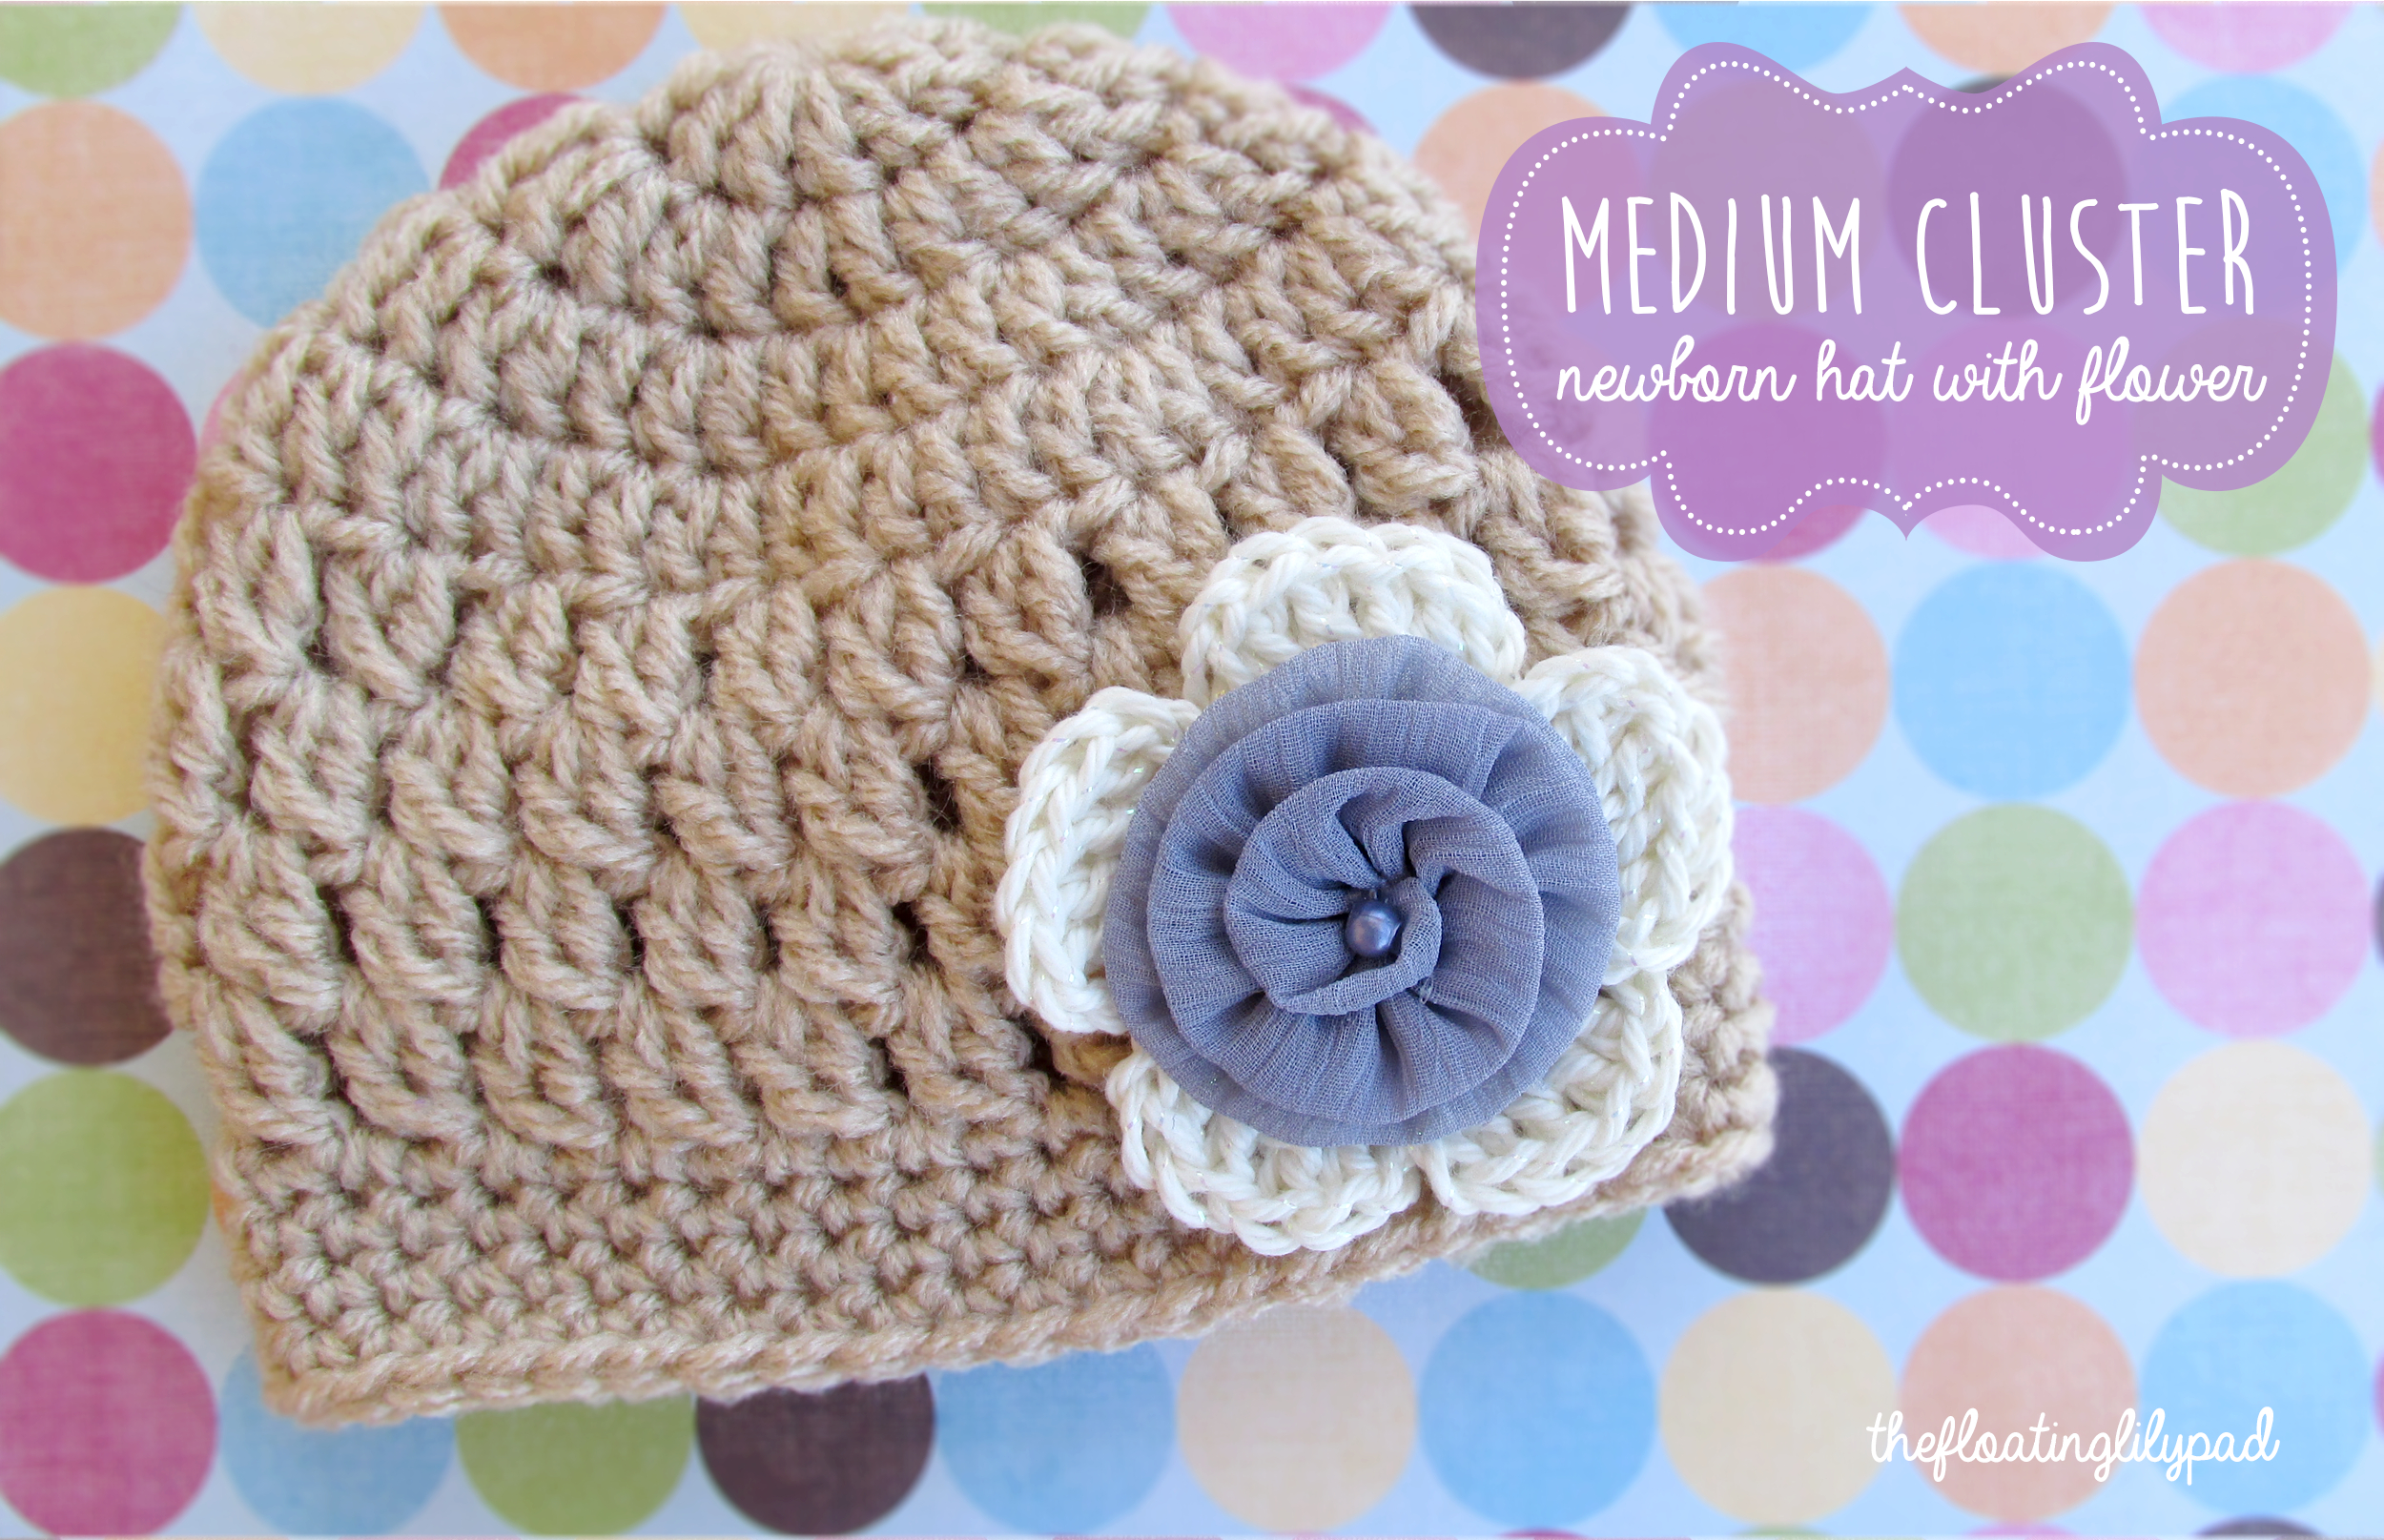 Crochet Baby Hat Pattern Medium Cluster Crochet Ba Hat With Flower Free Pattern The